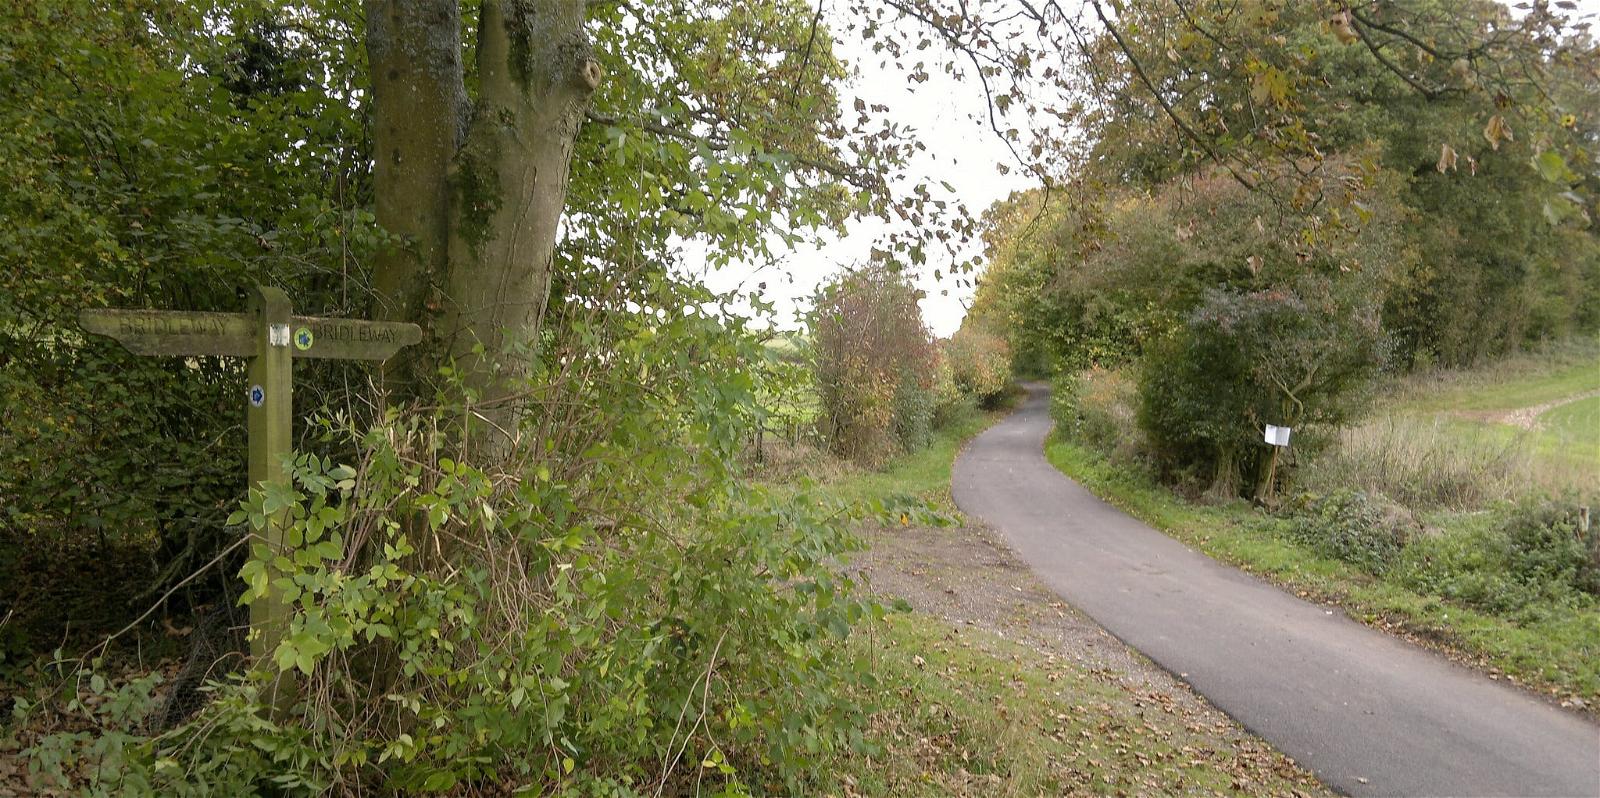 Portway की छवि. uk england sign hampshire bridleway hants publicbridleway cyclingdiscoveries mapmyride:route=1043529039